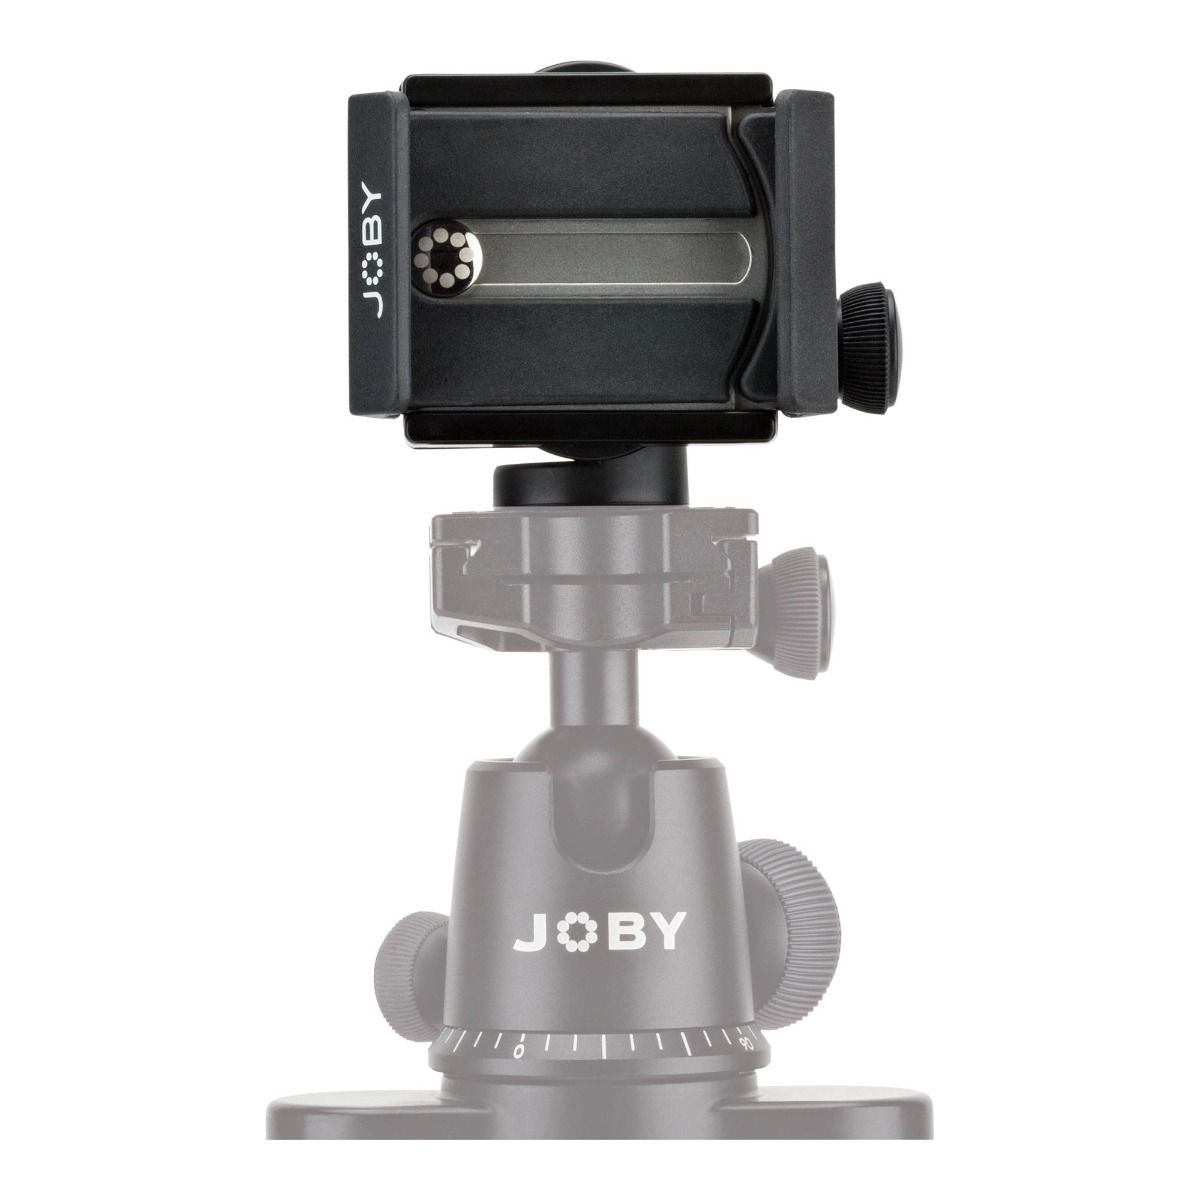 Joby GripTight Mount PRO for Smartphone